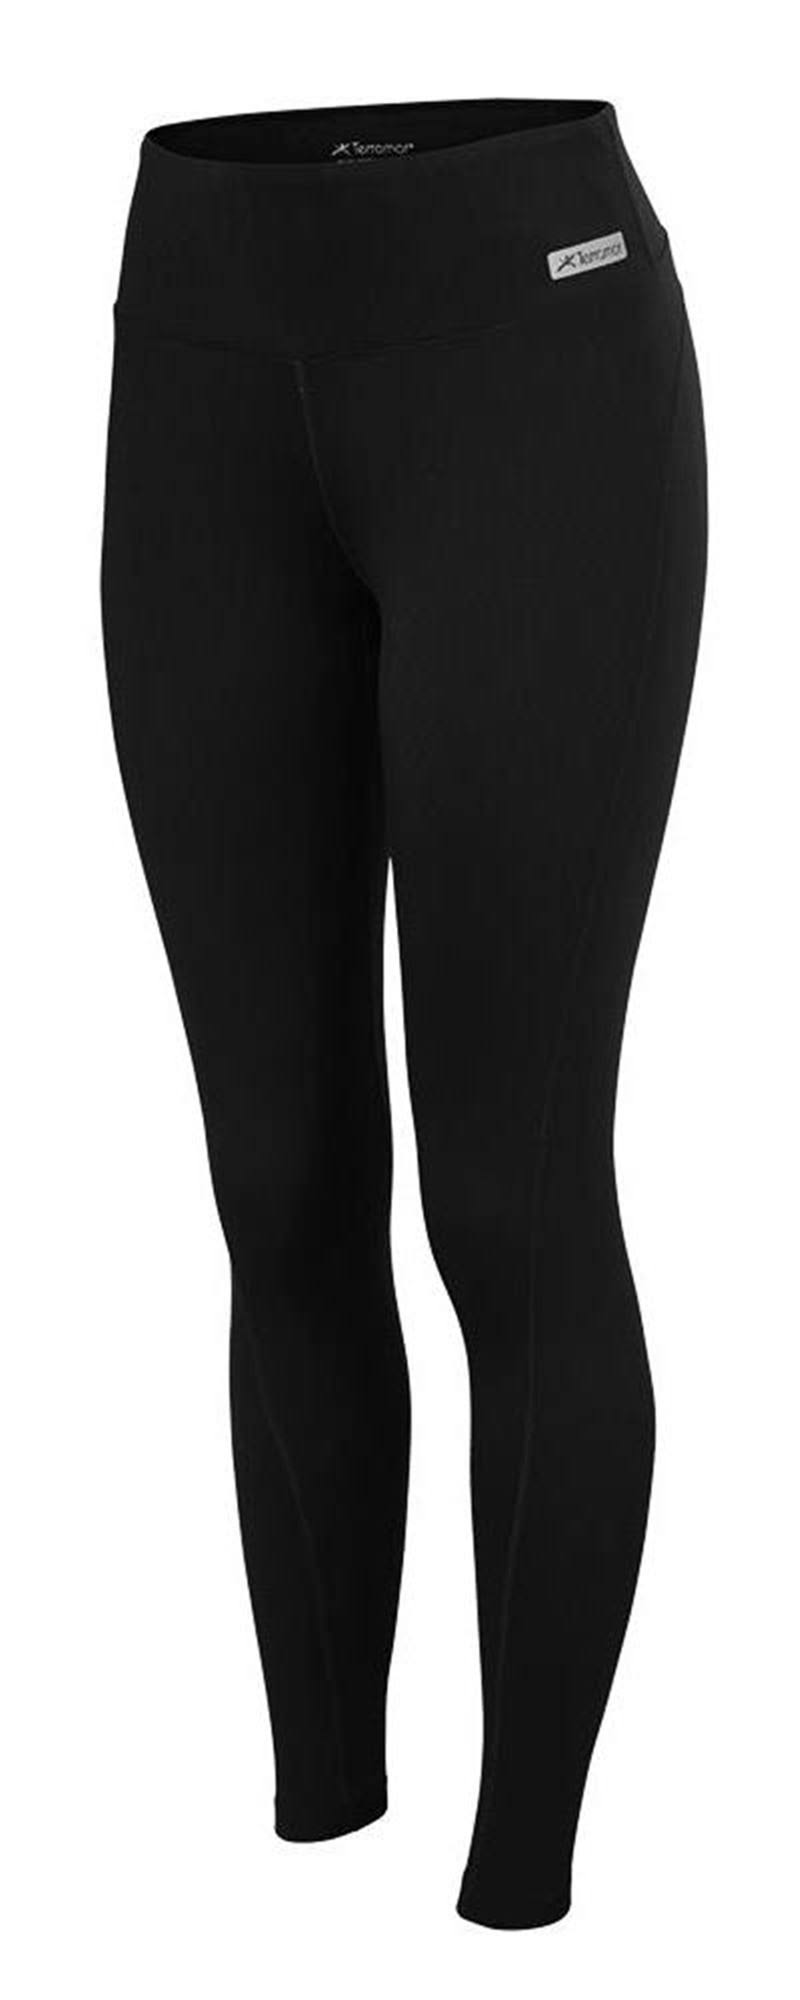 Terramar Women's Thermolator Pants - Black, Large